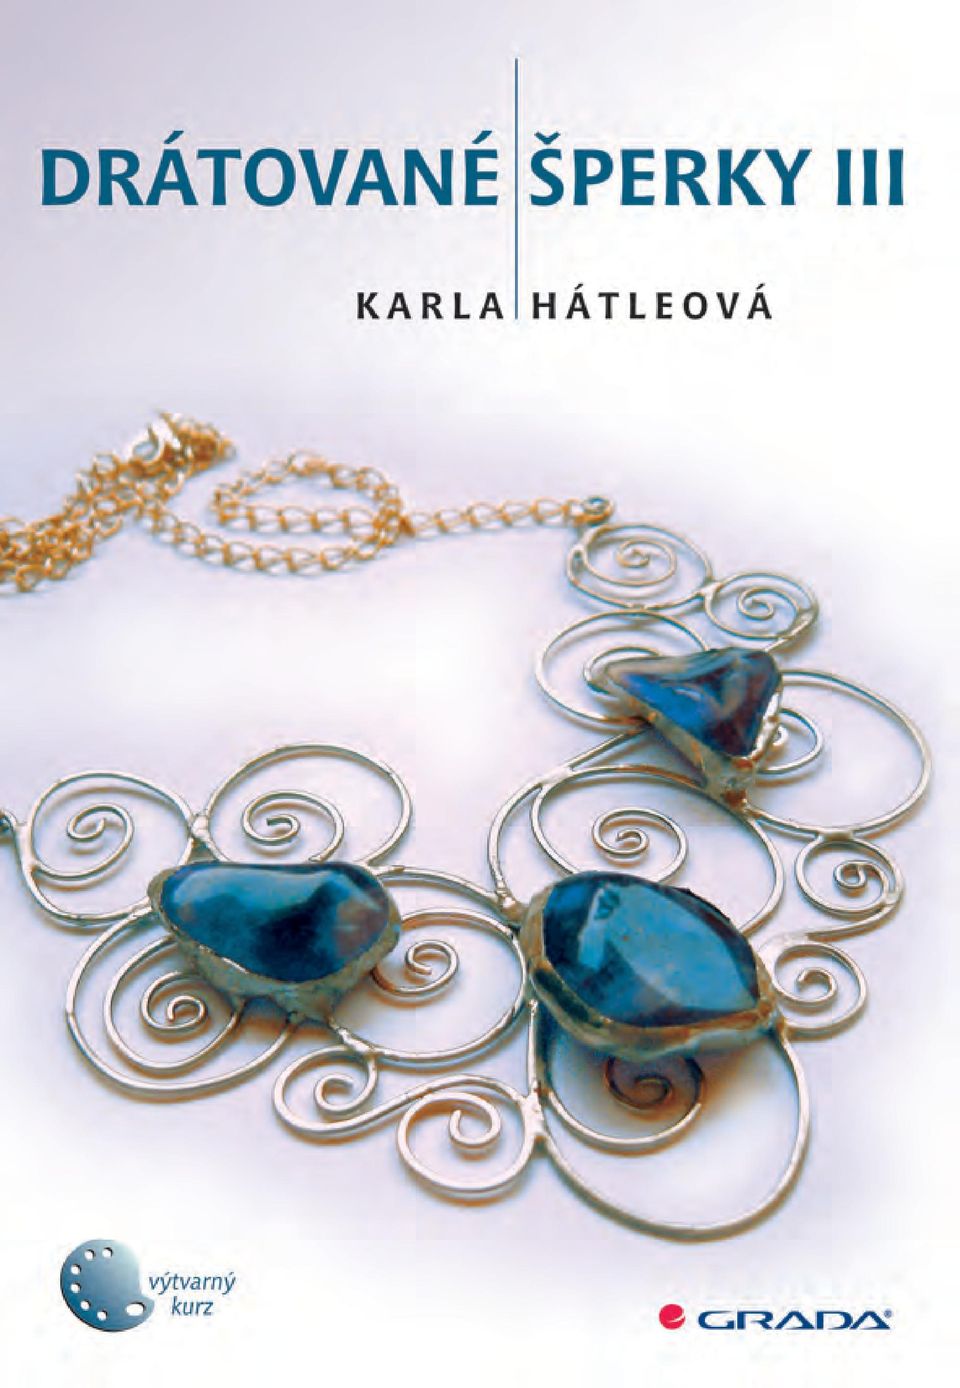 Drátované šperky III. Karla Hátleová - PDF Free Download